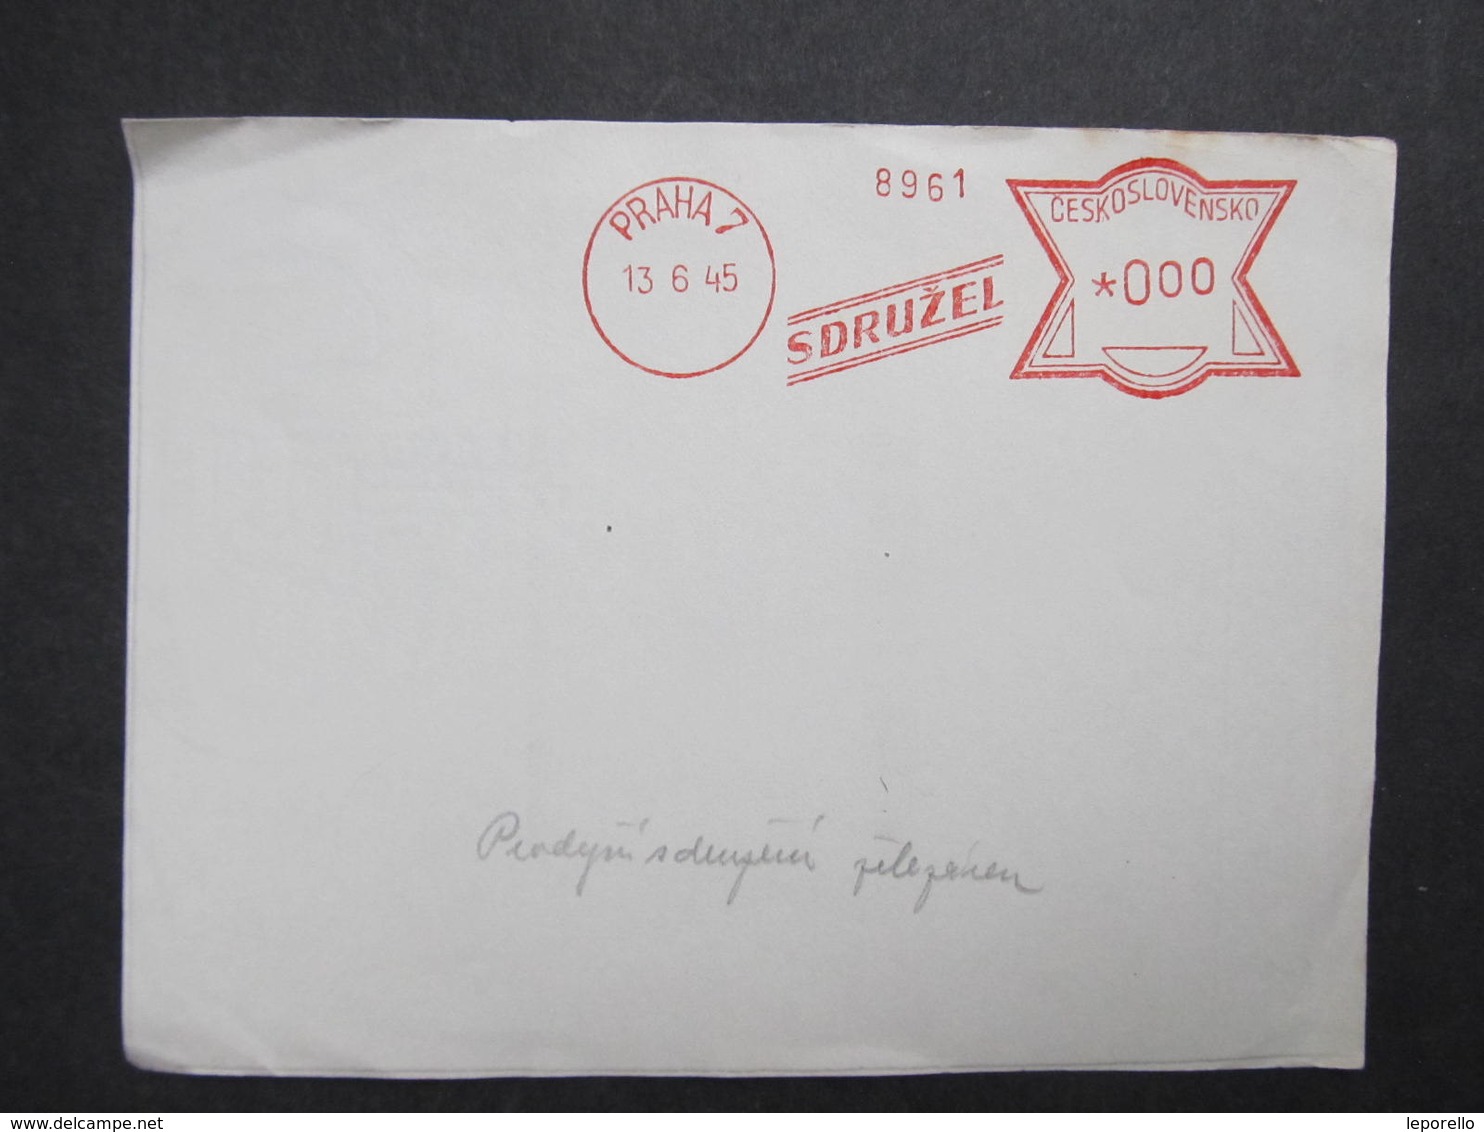 AUSCHNITT Praha 7 Sdruzel 1945 Frankotype Postfreistempel // L0592 - Briefe U. Dokumente